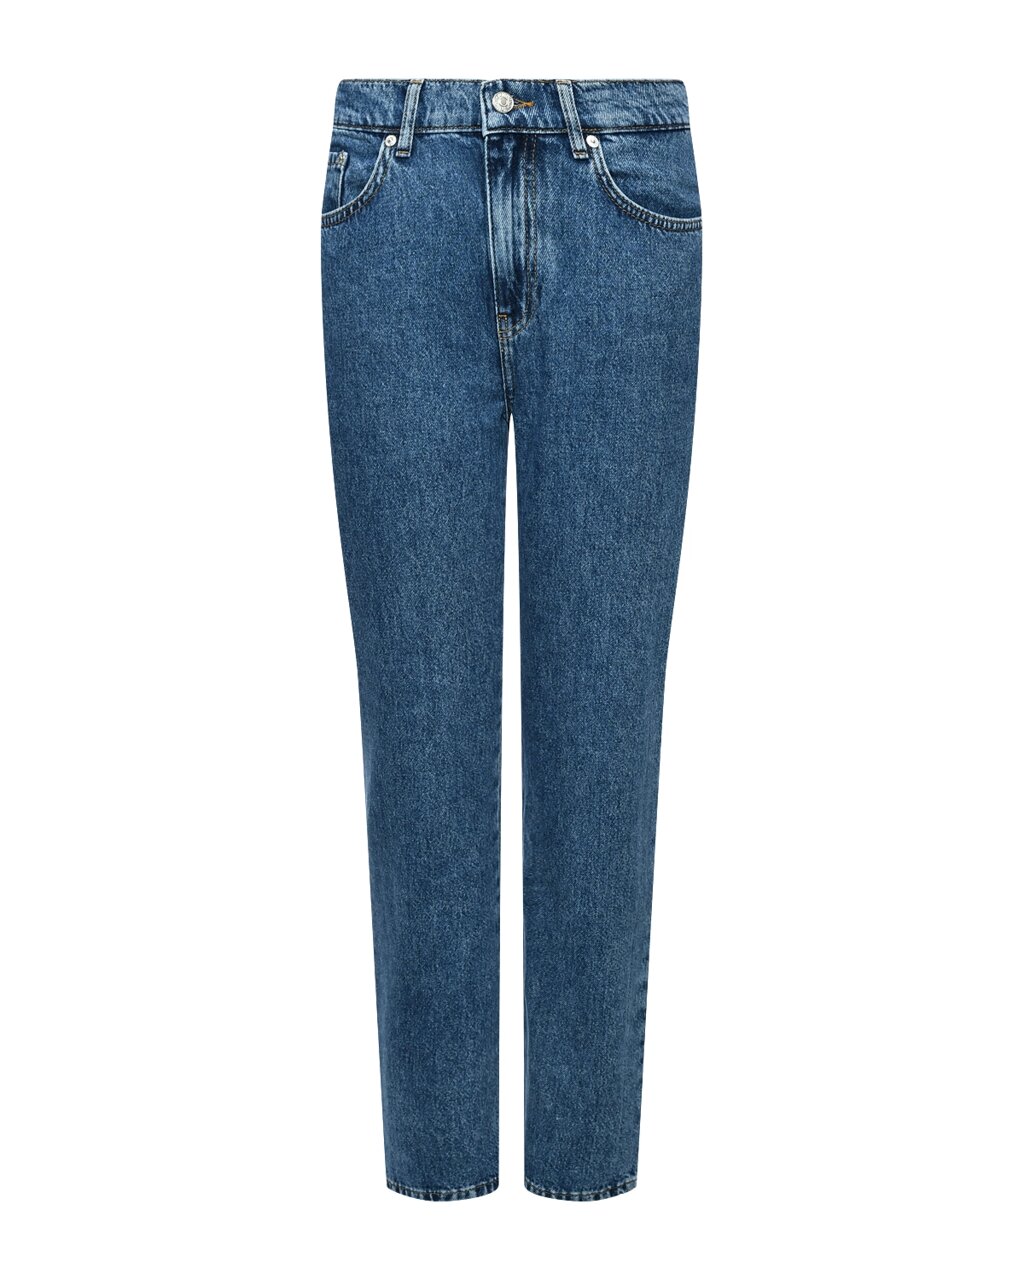 Джинсы прямые, синие Mo5ch1no Jeans от компании Admi - фото 1